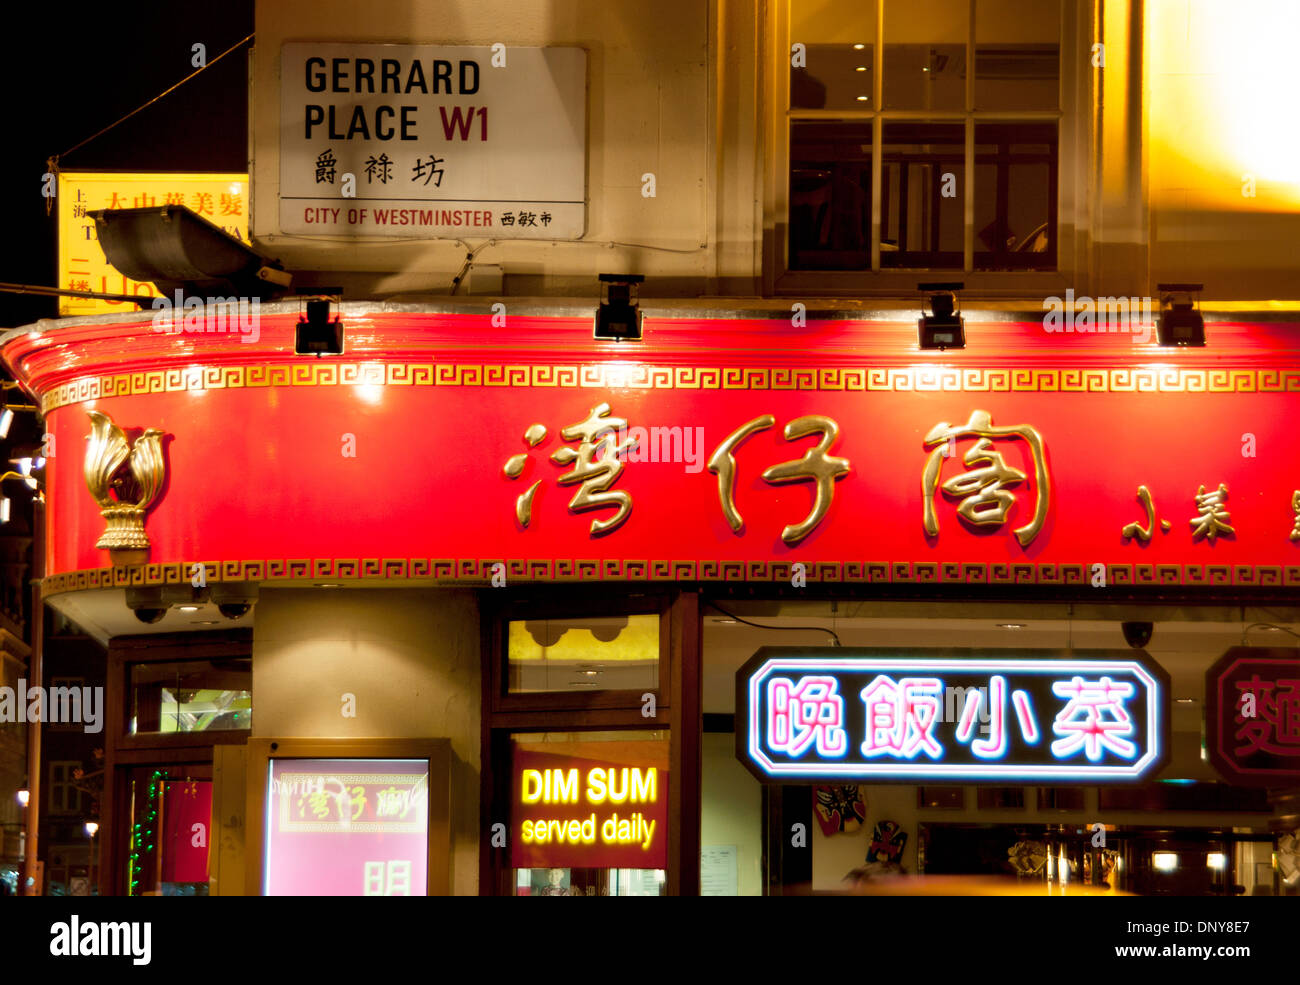 Chinatown Dim Sum restaurant and signage at night Gerrard Place London W1 England UK Stock Photo